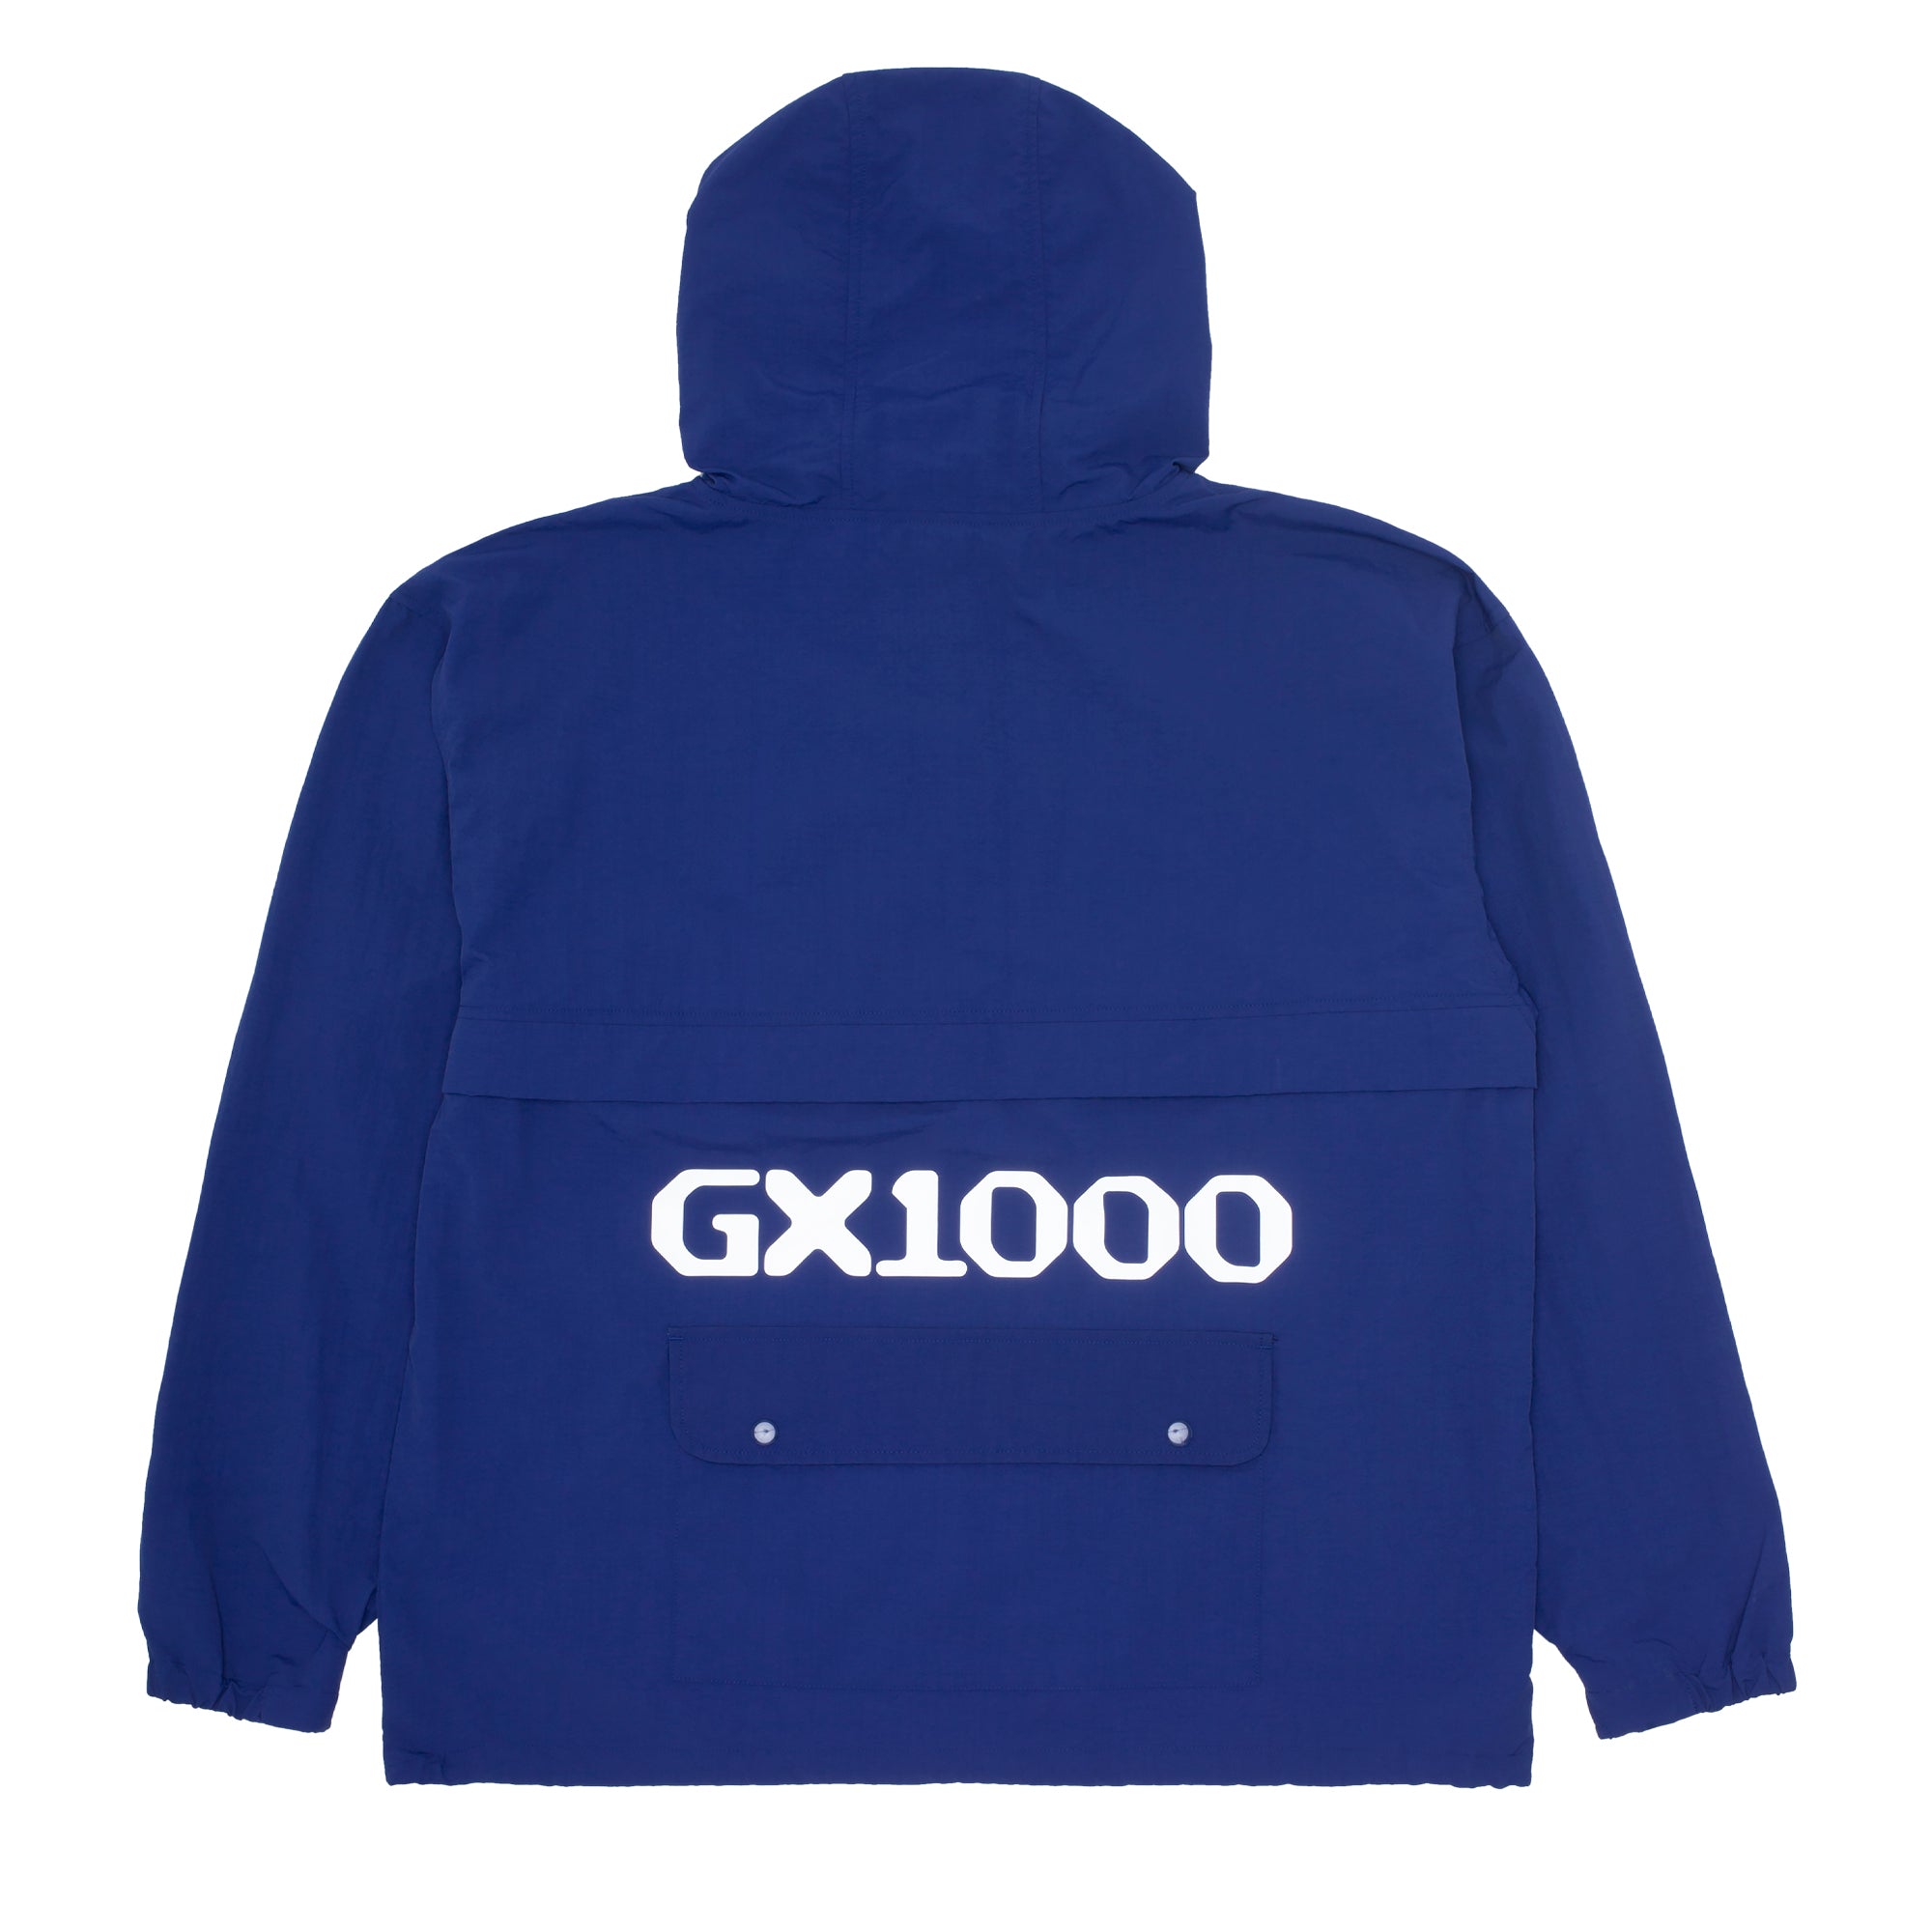 GX1000 - Anorak Jacket "Royal"